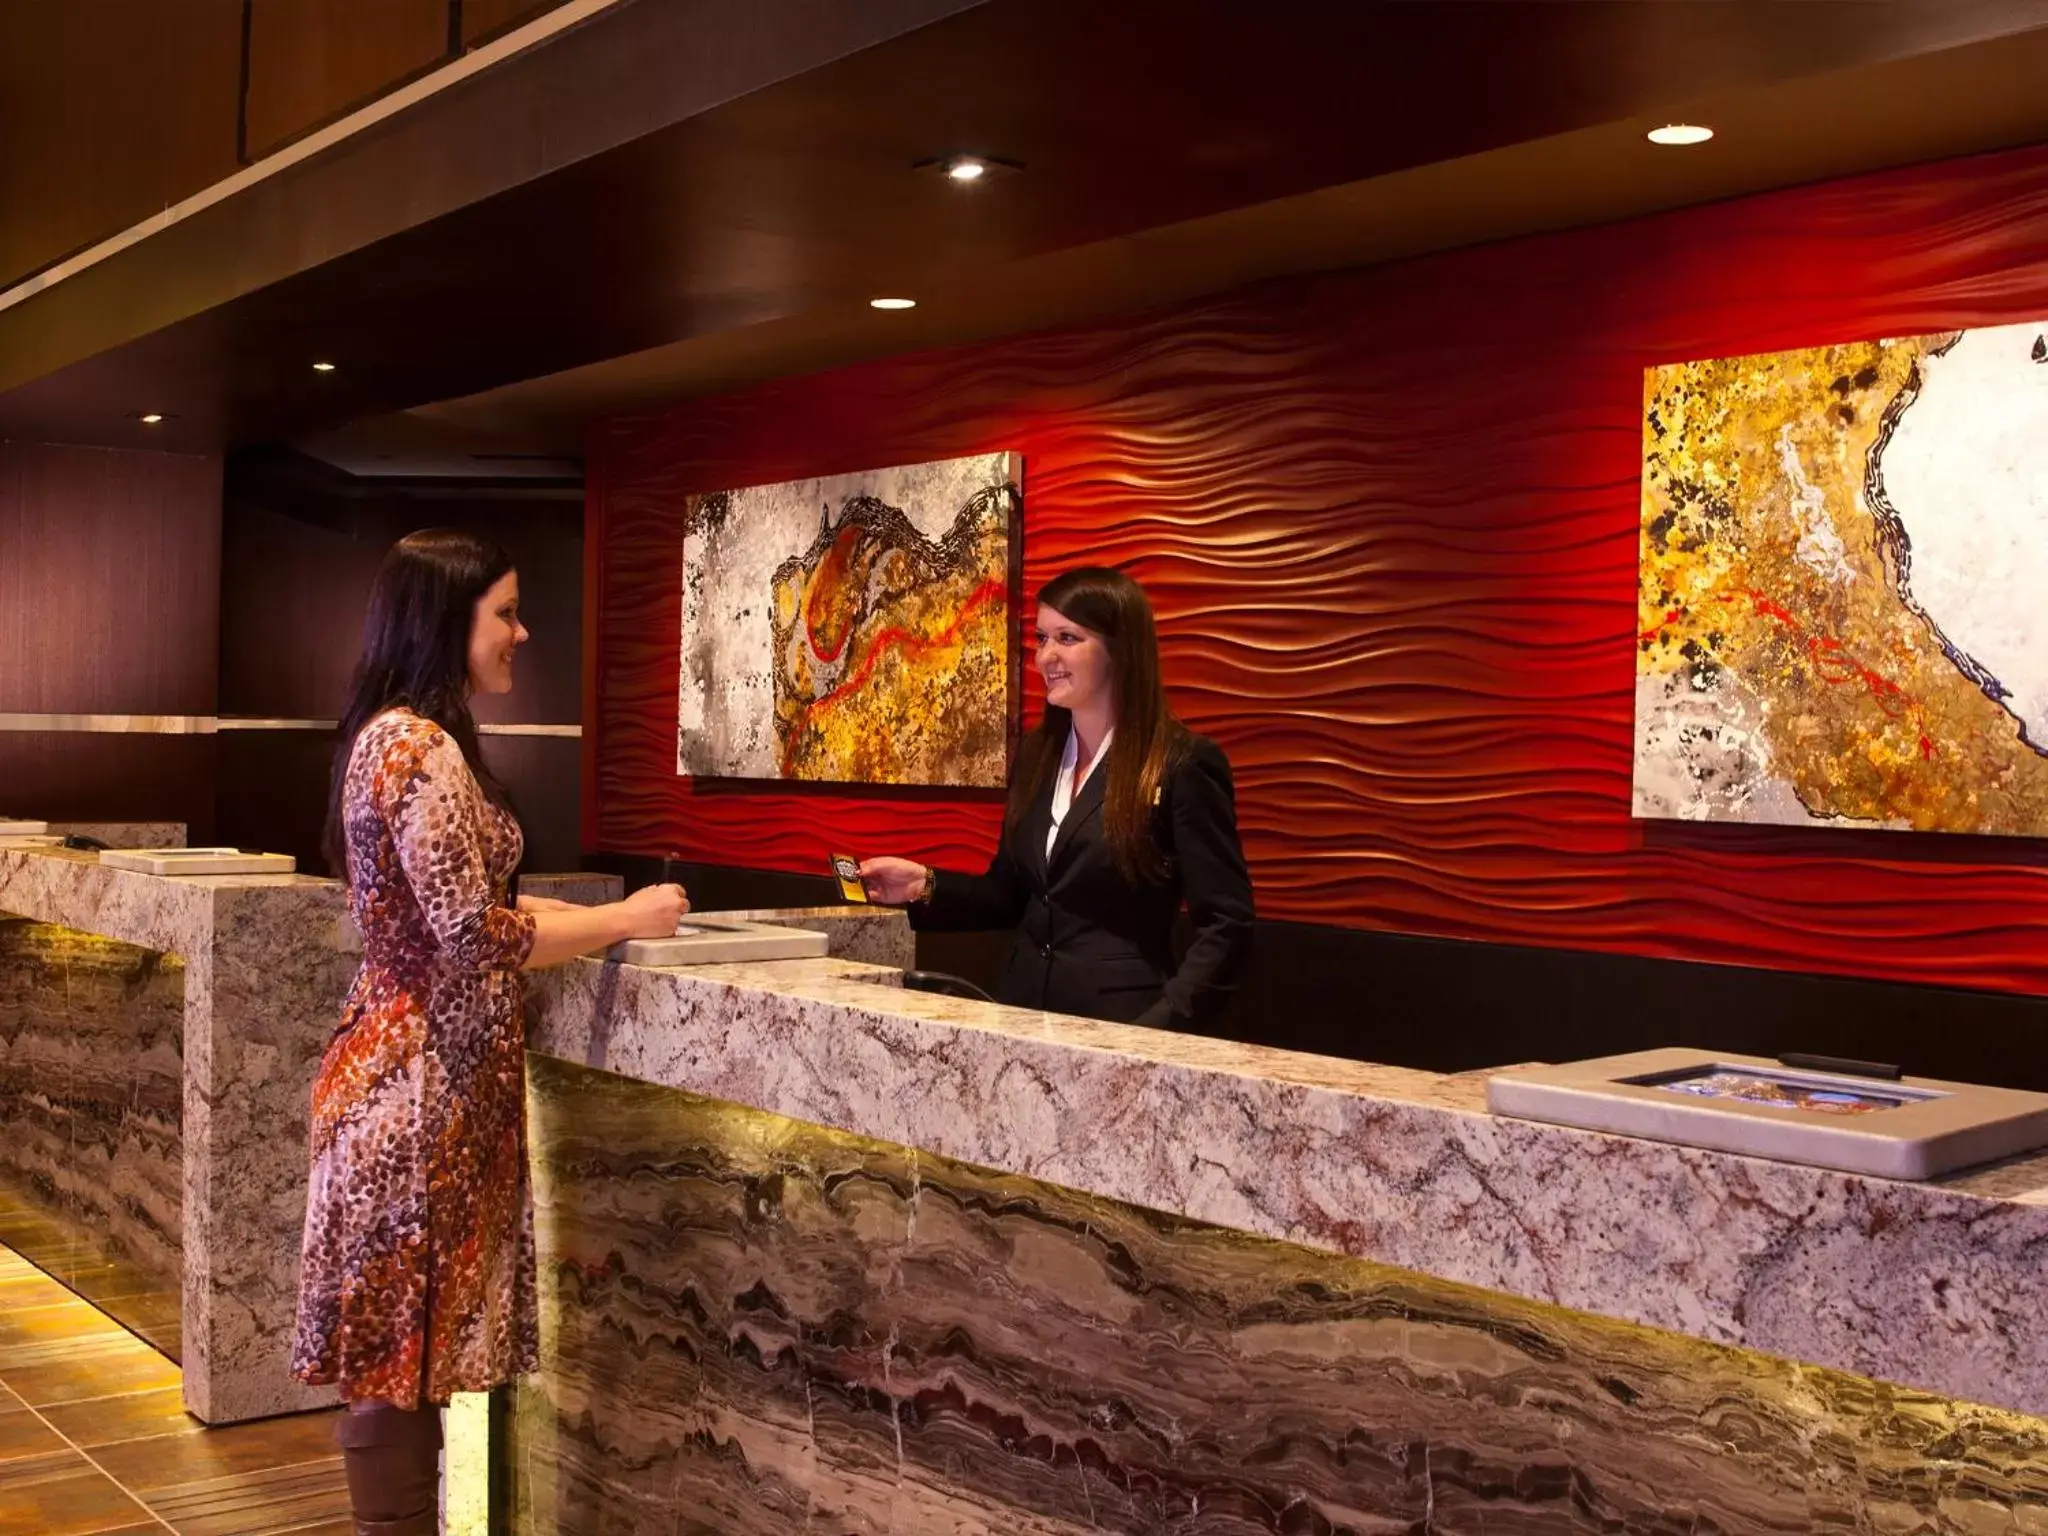 Lobby or reception in Golden Nugget Biloxi